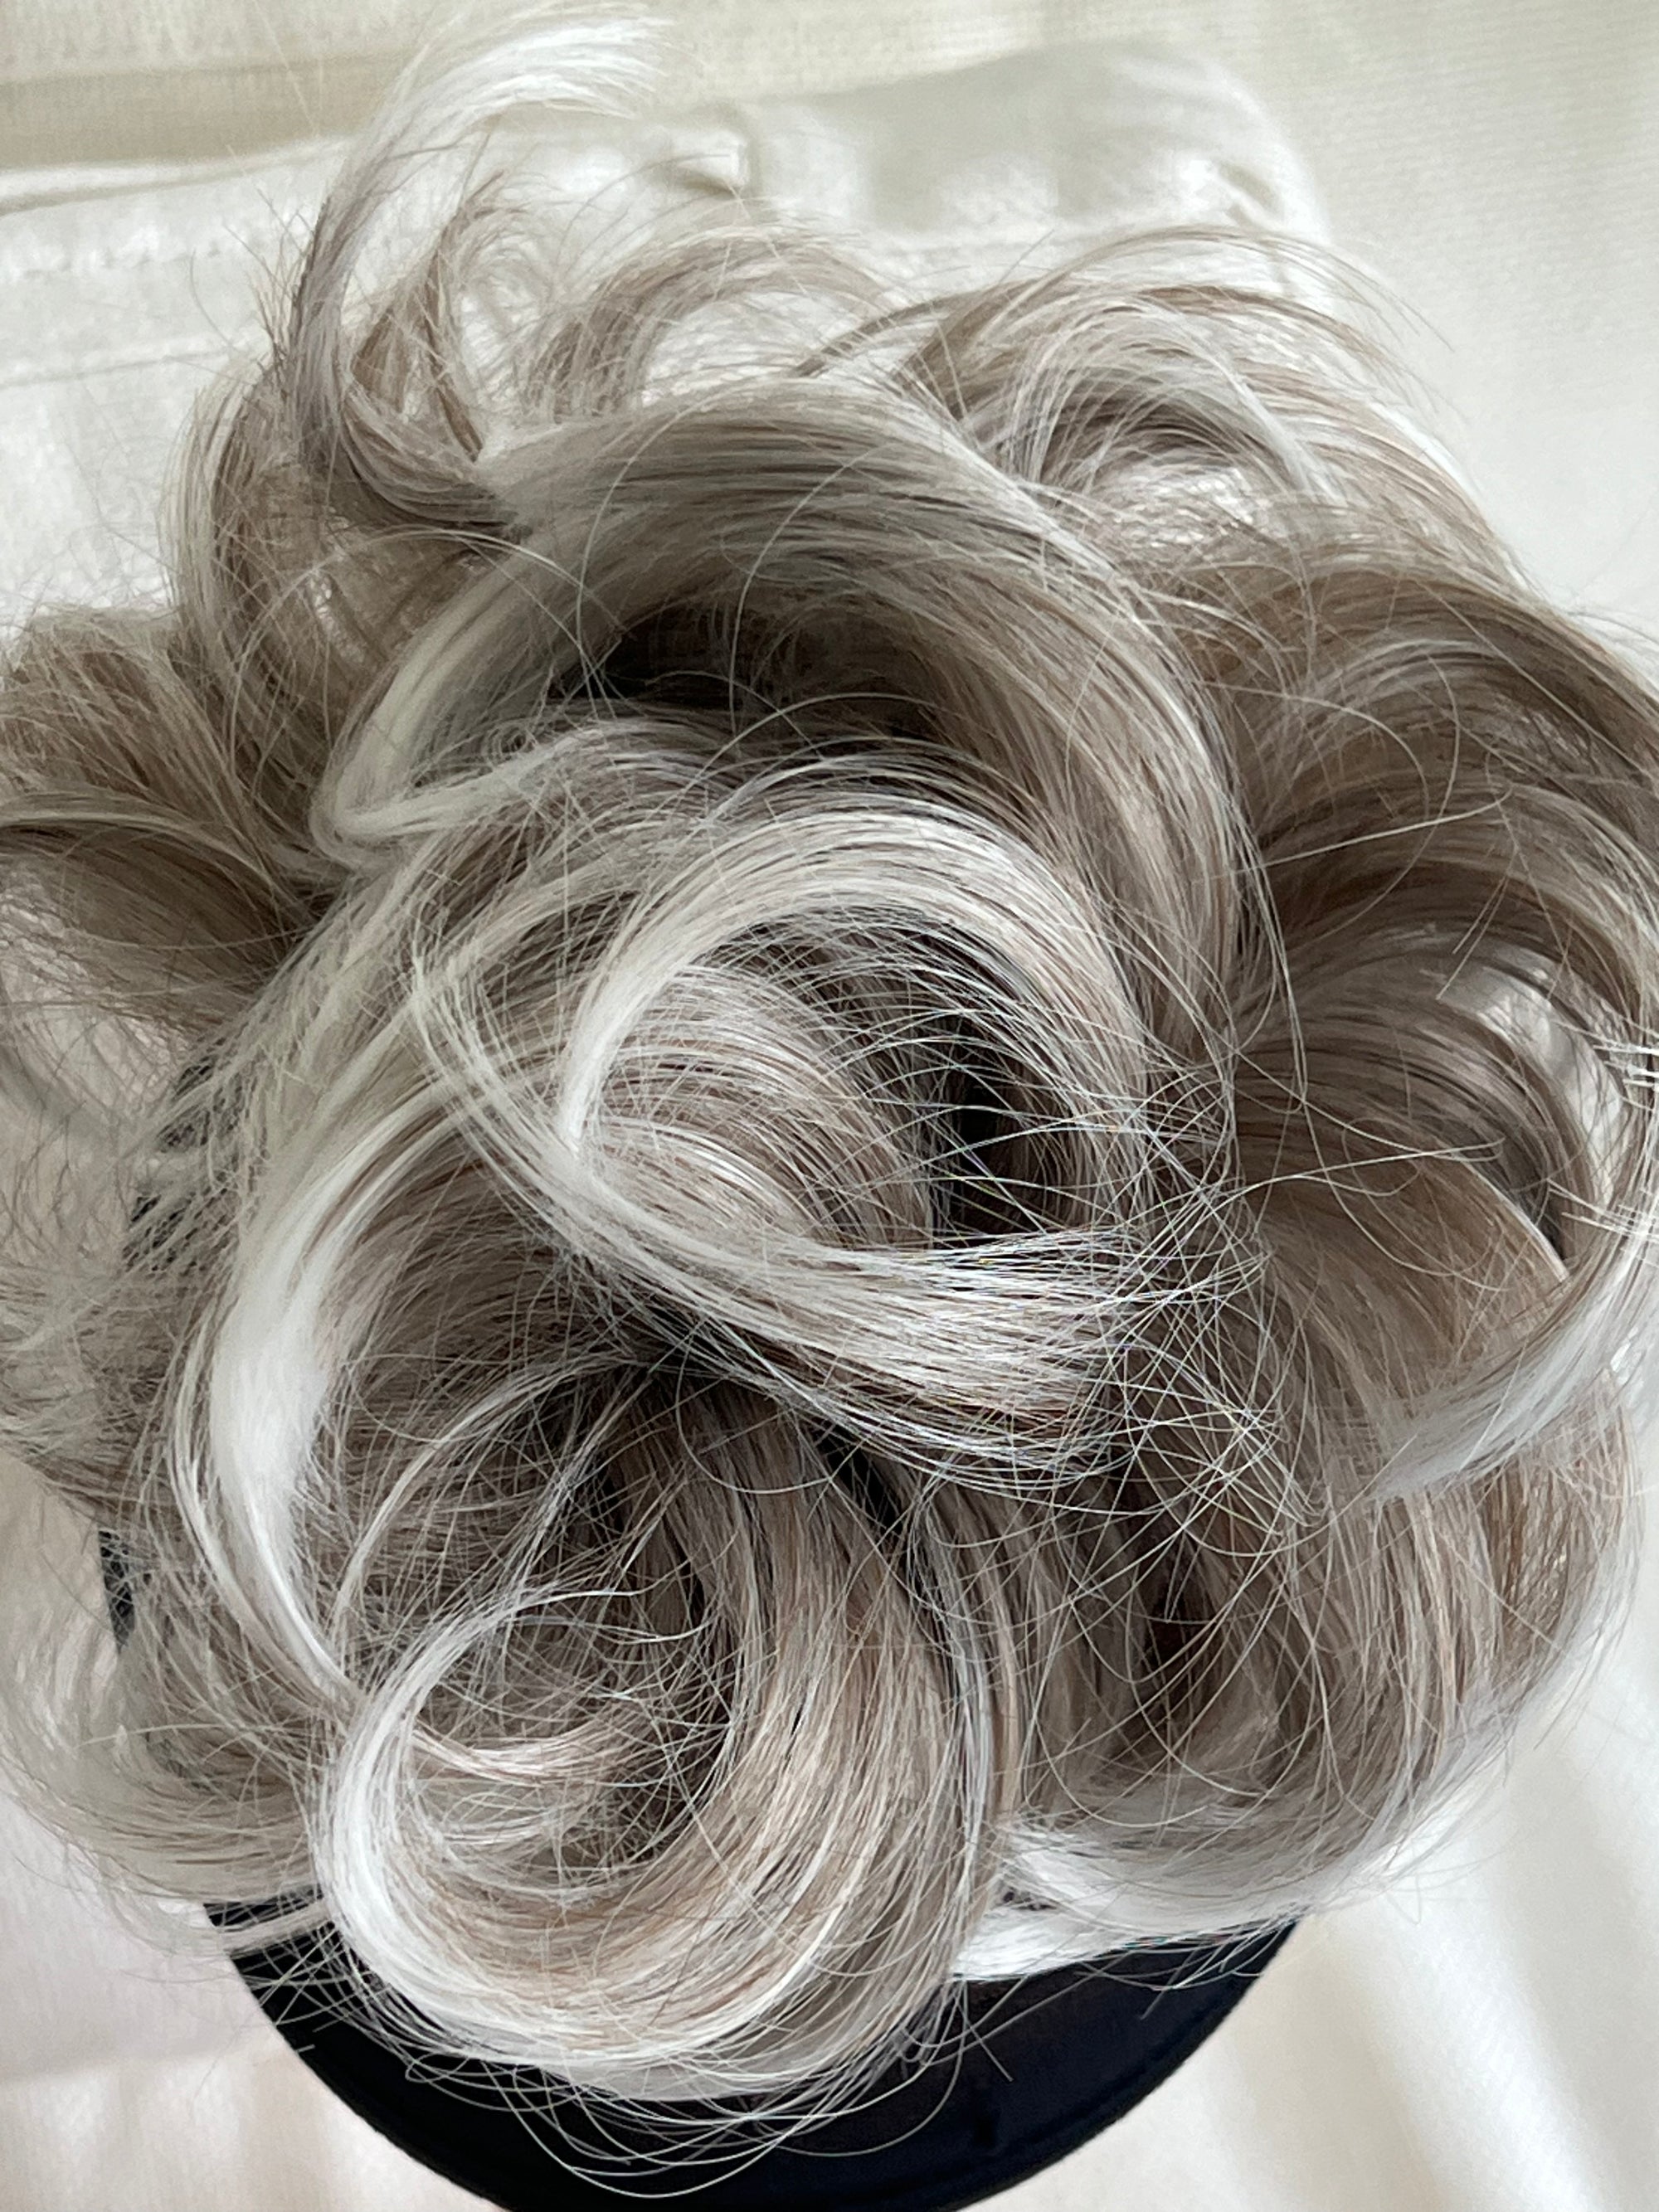 Tillstyle elastic messy bun hair piece curly hair bun hair extensions curly light grey blonde white ends